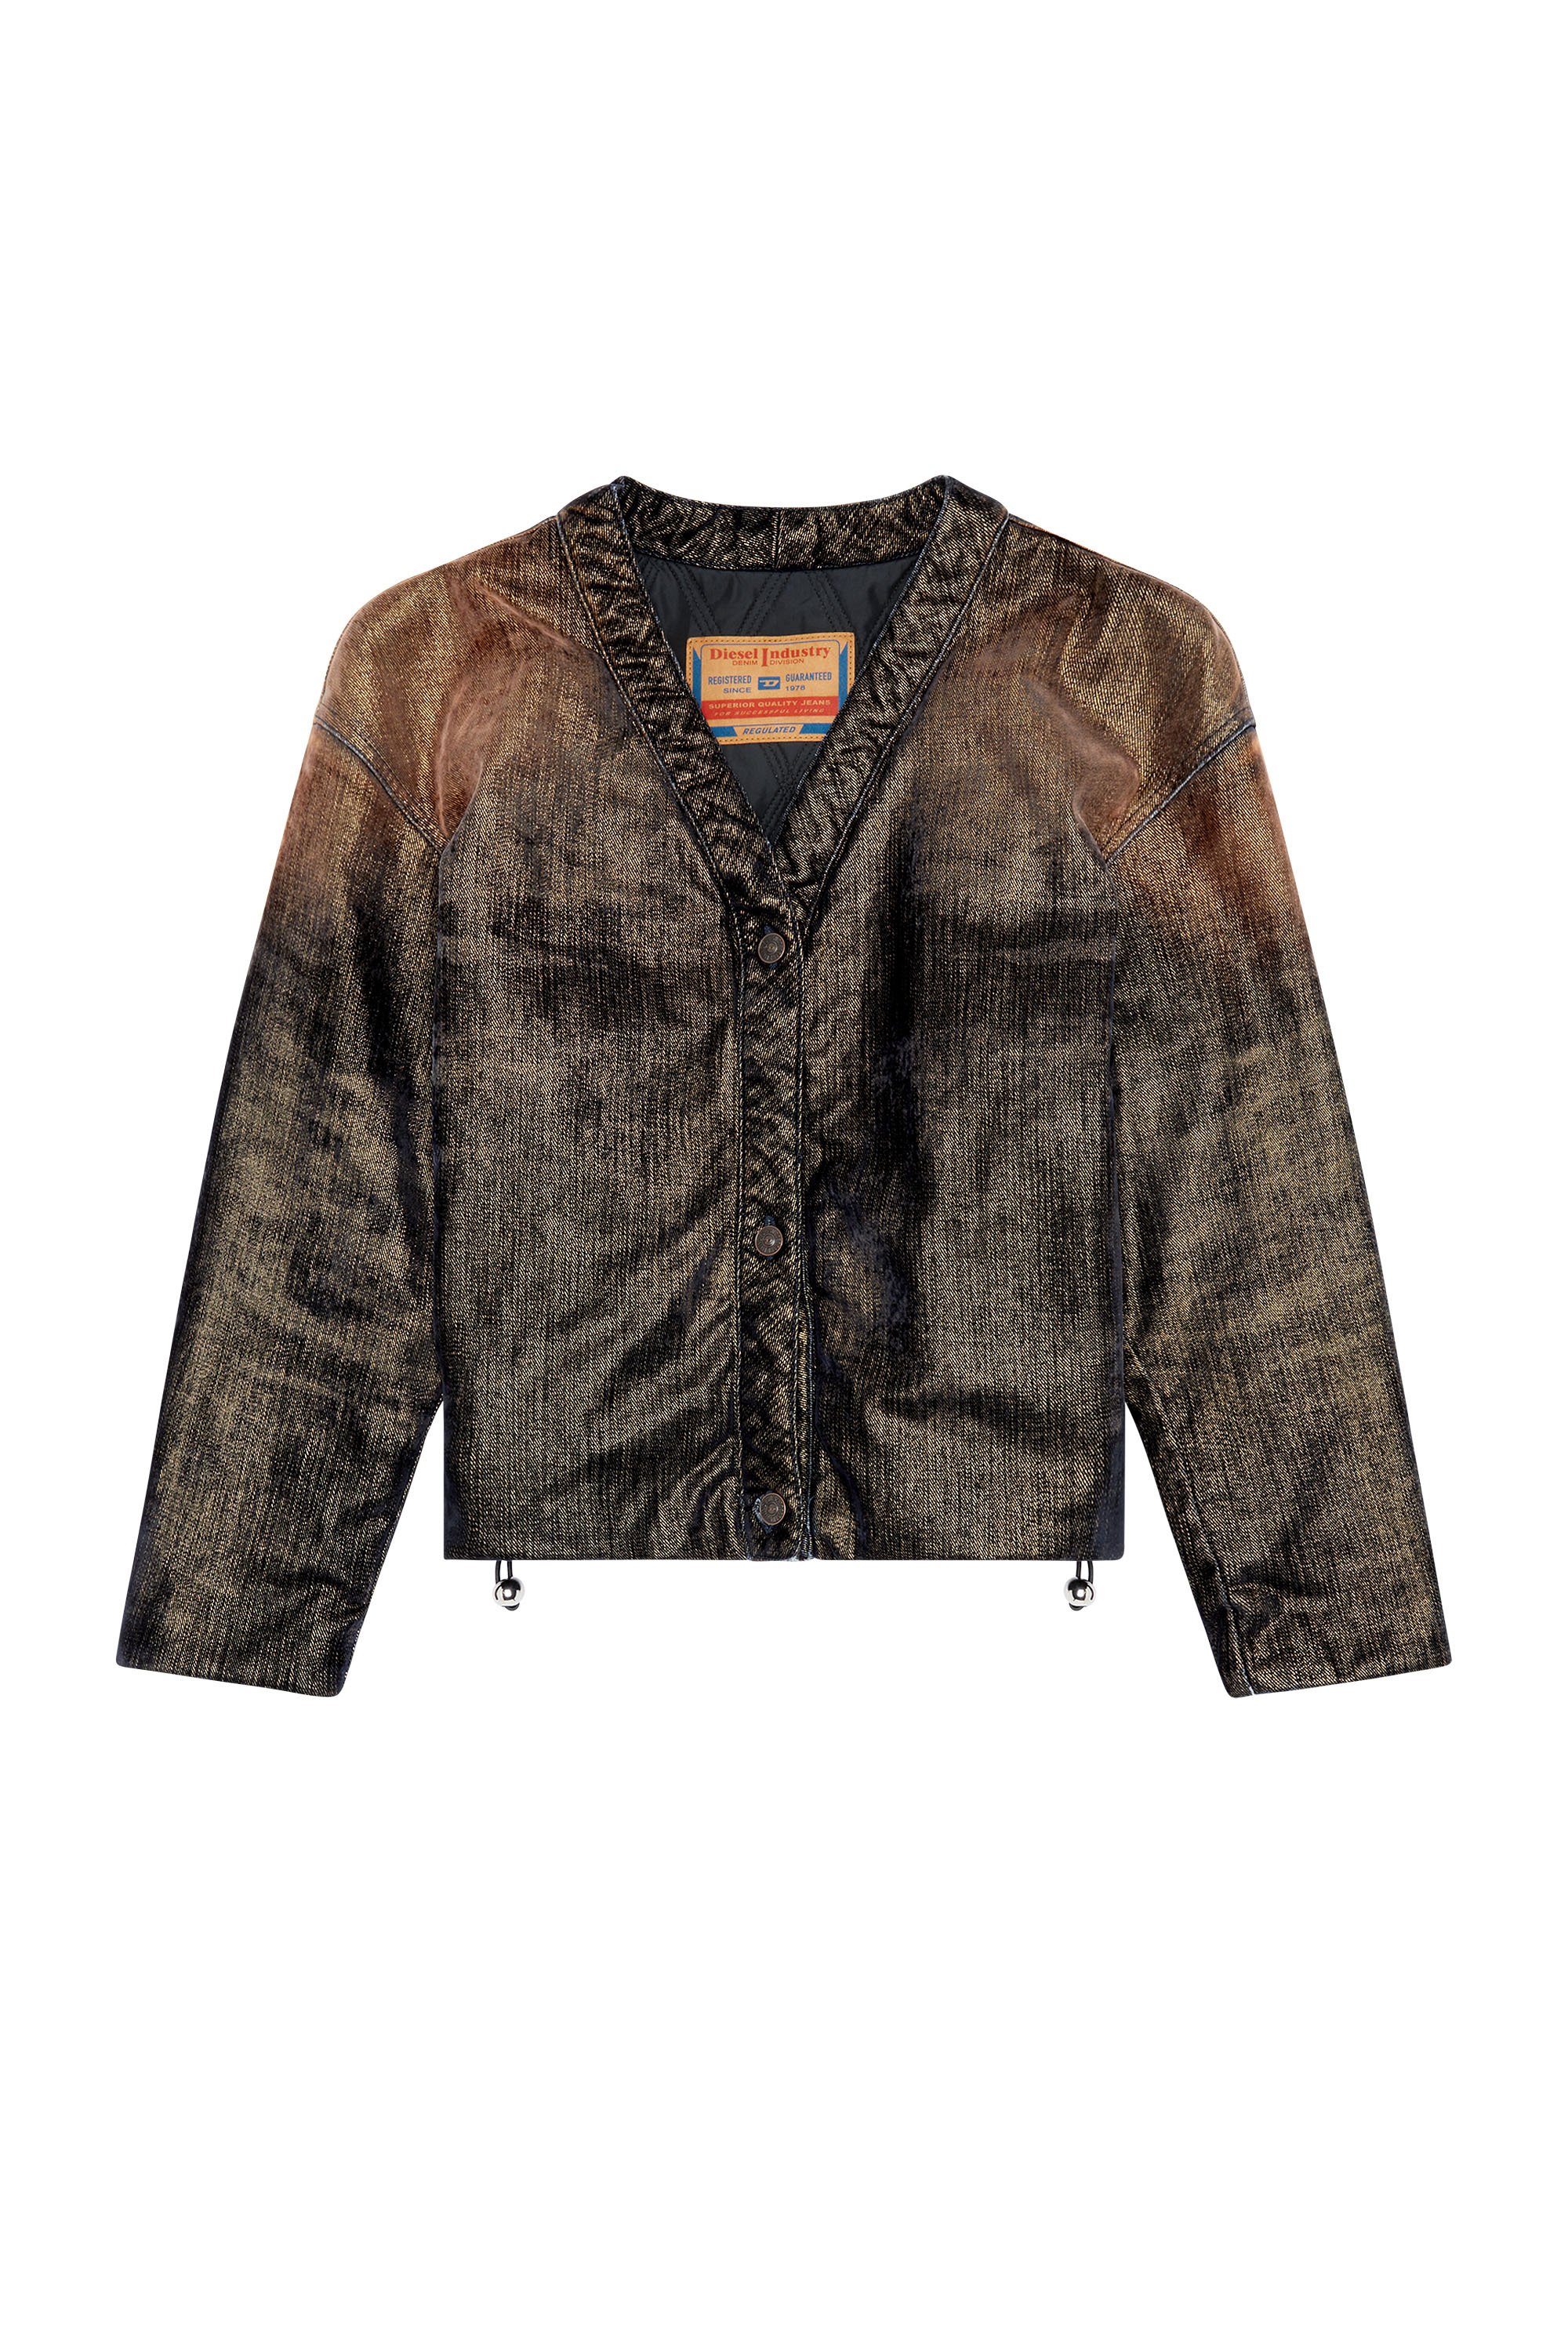 Diesel - DE-CONF-S, Female Jacket in shimmery denim in Multicolor - Image 6